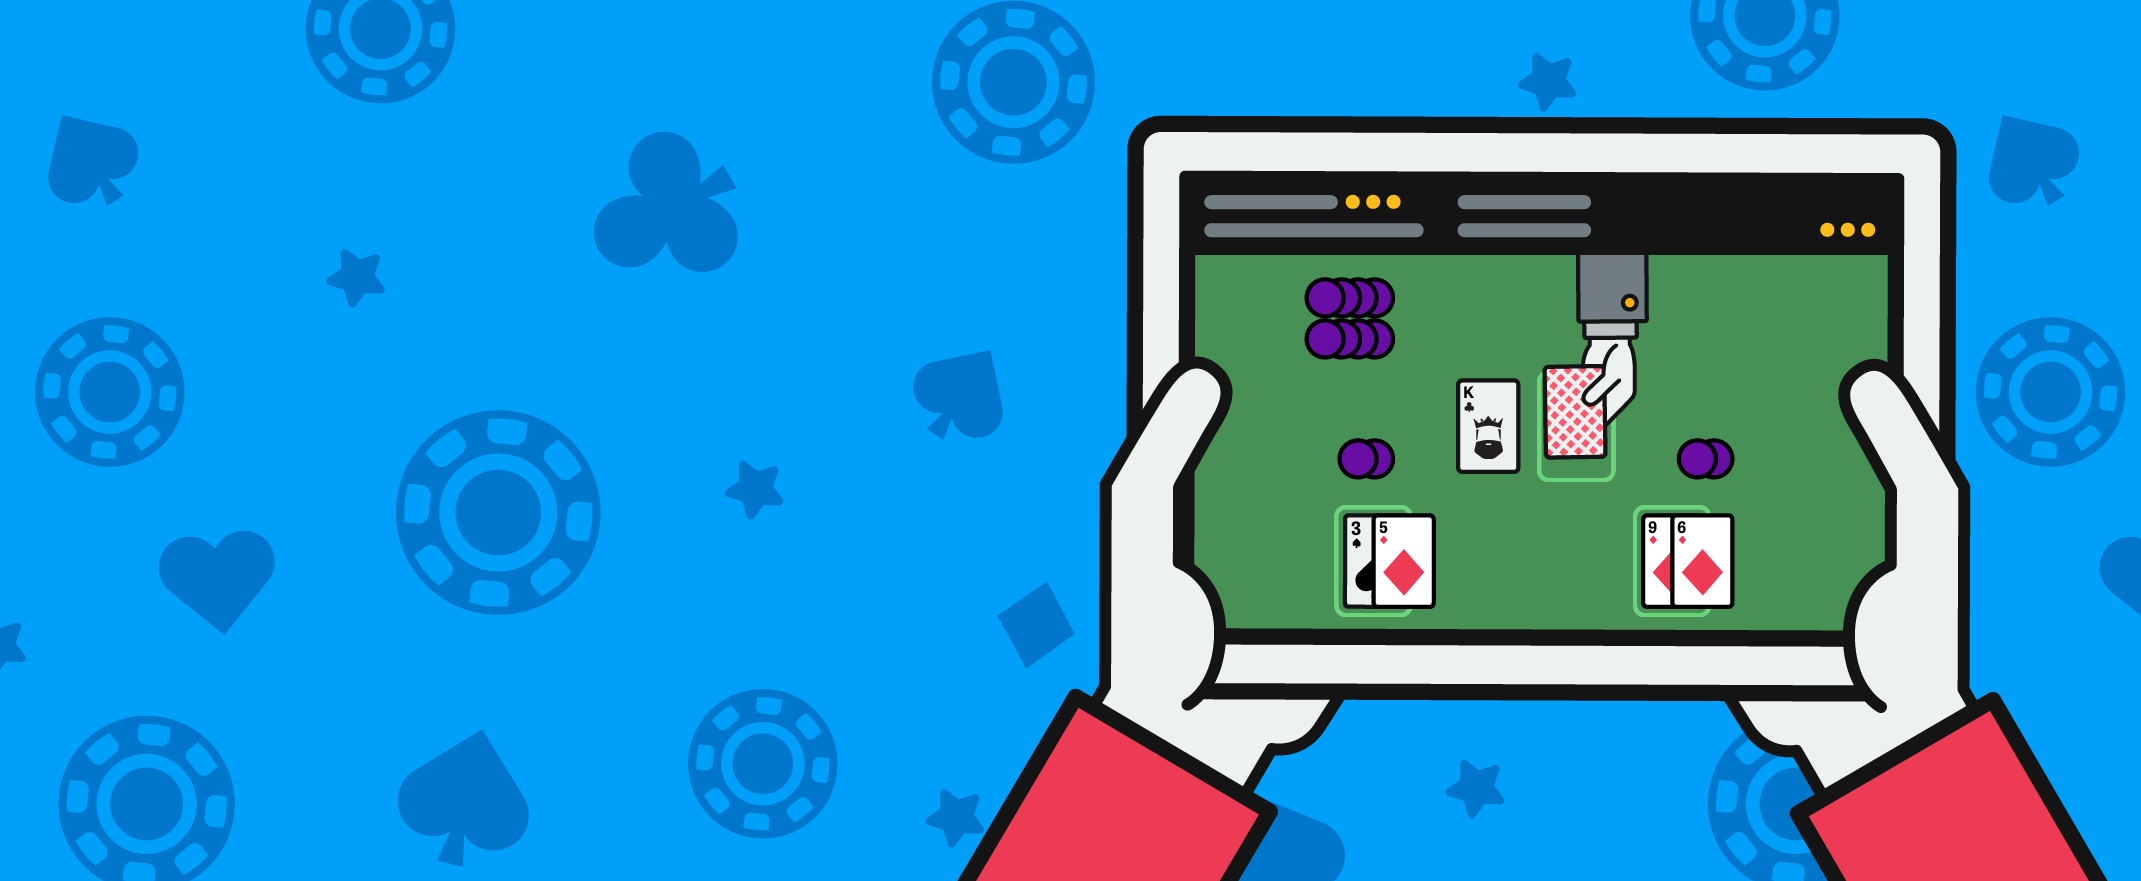 Top 9 ways to win at blackjack